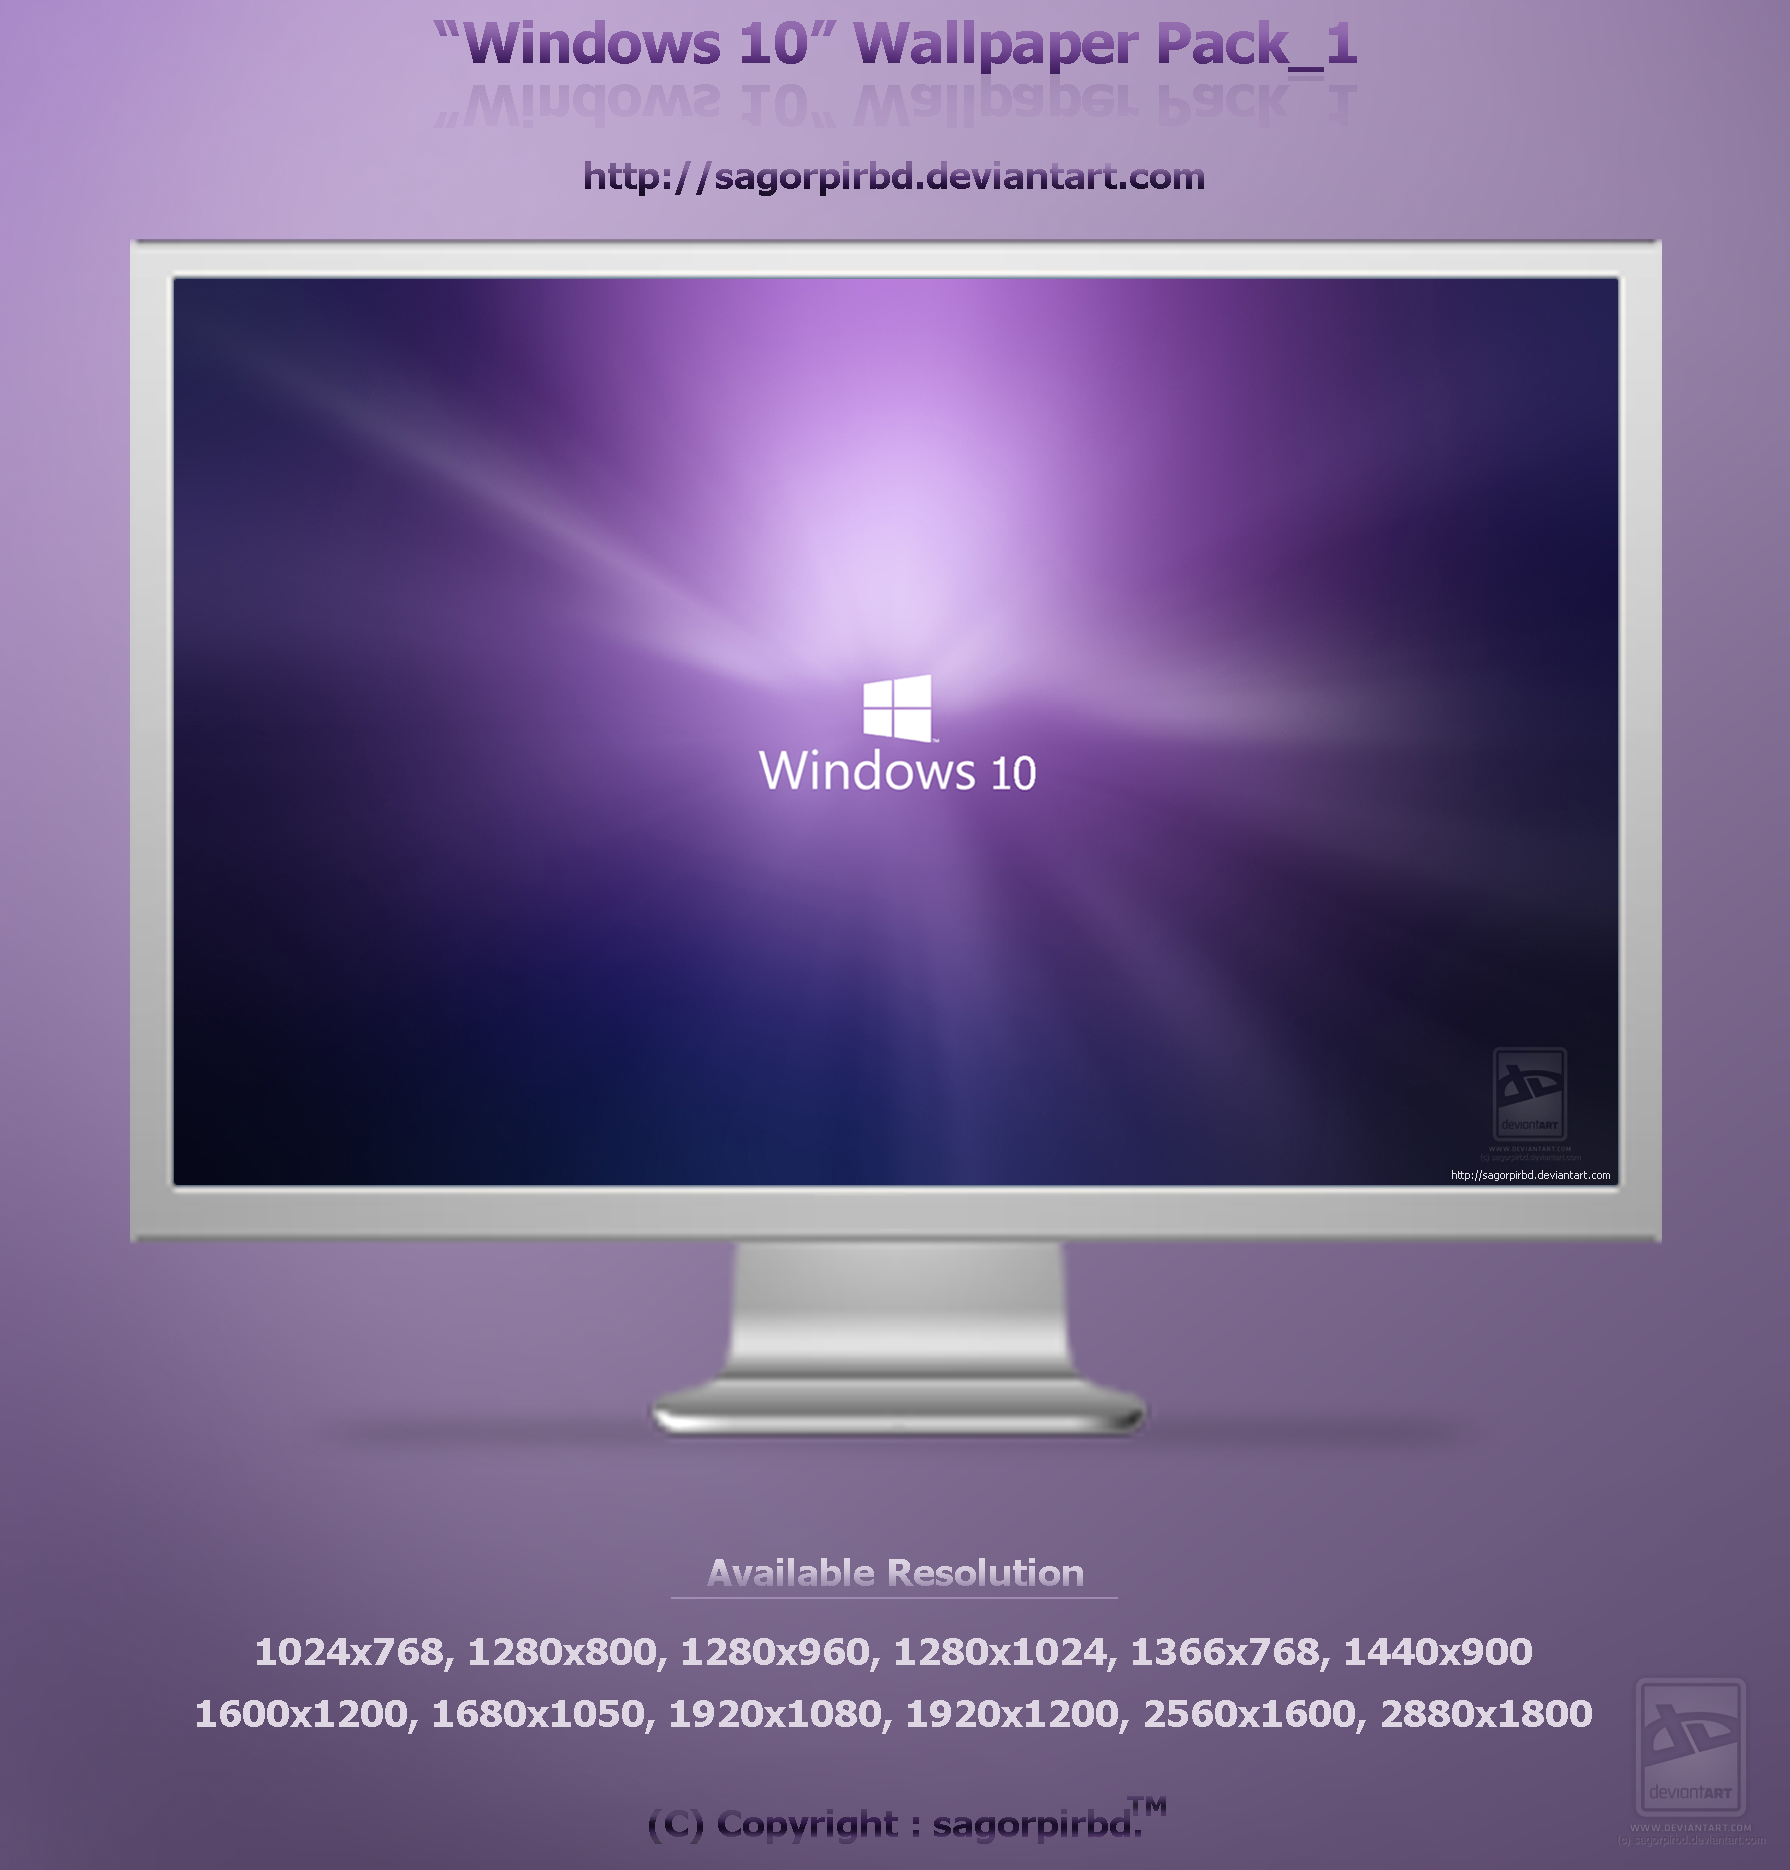 Windows 10 Wallpaper Pack 1 by sagorpirbd on DeviantArt